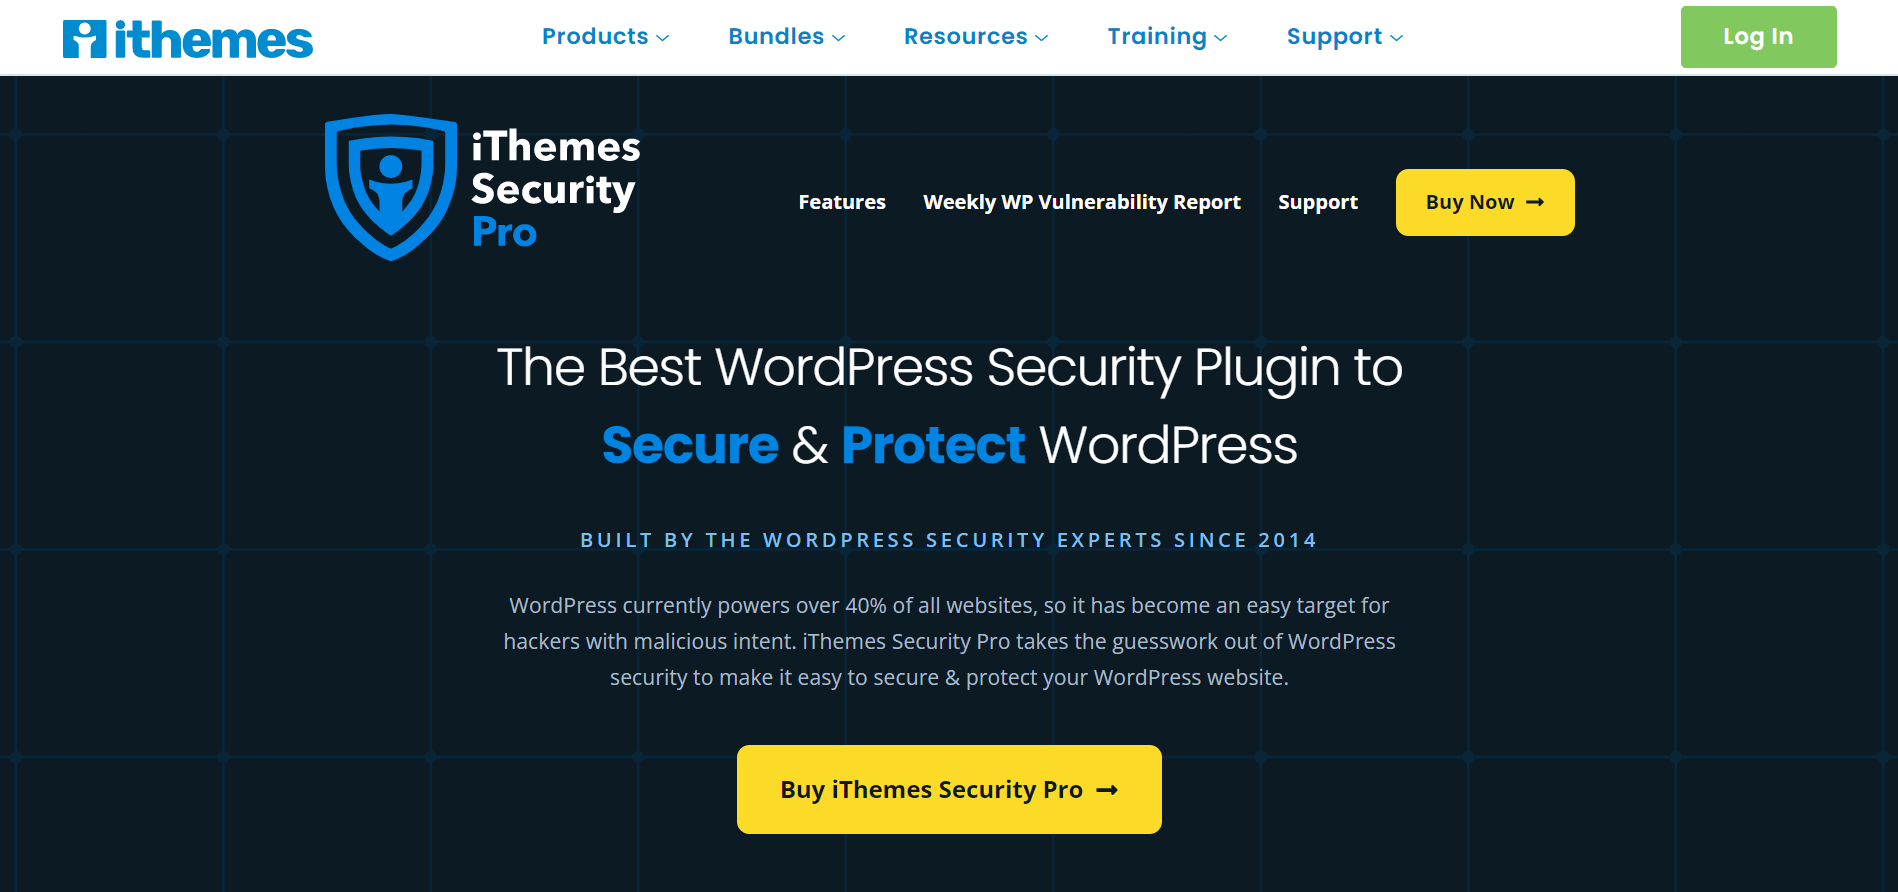 iThemes security free vs pro